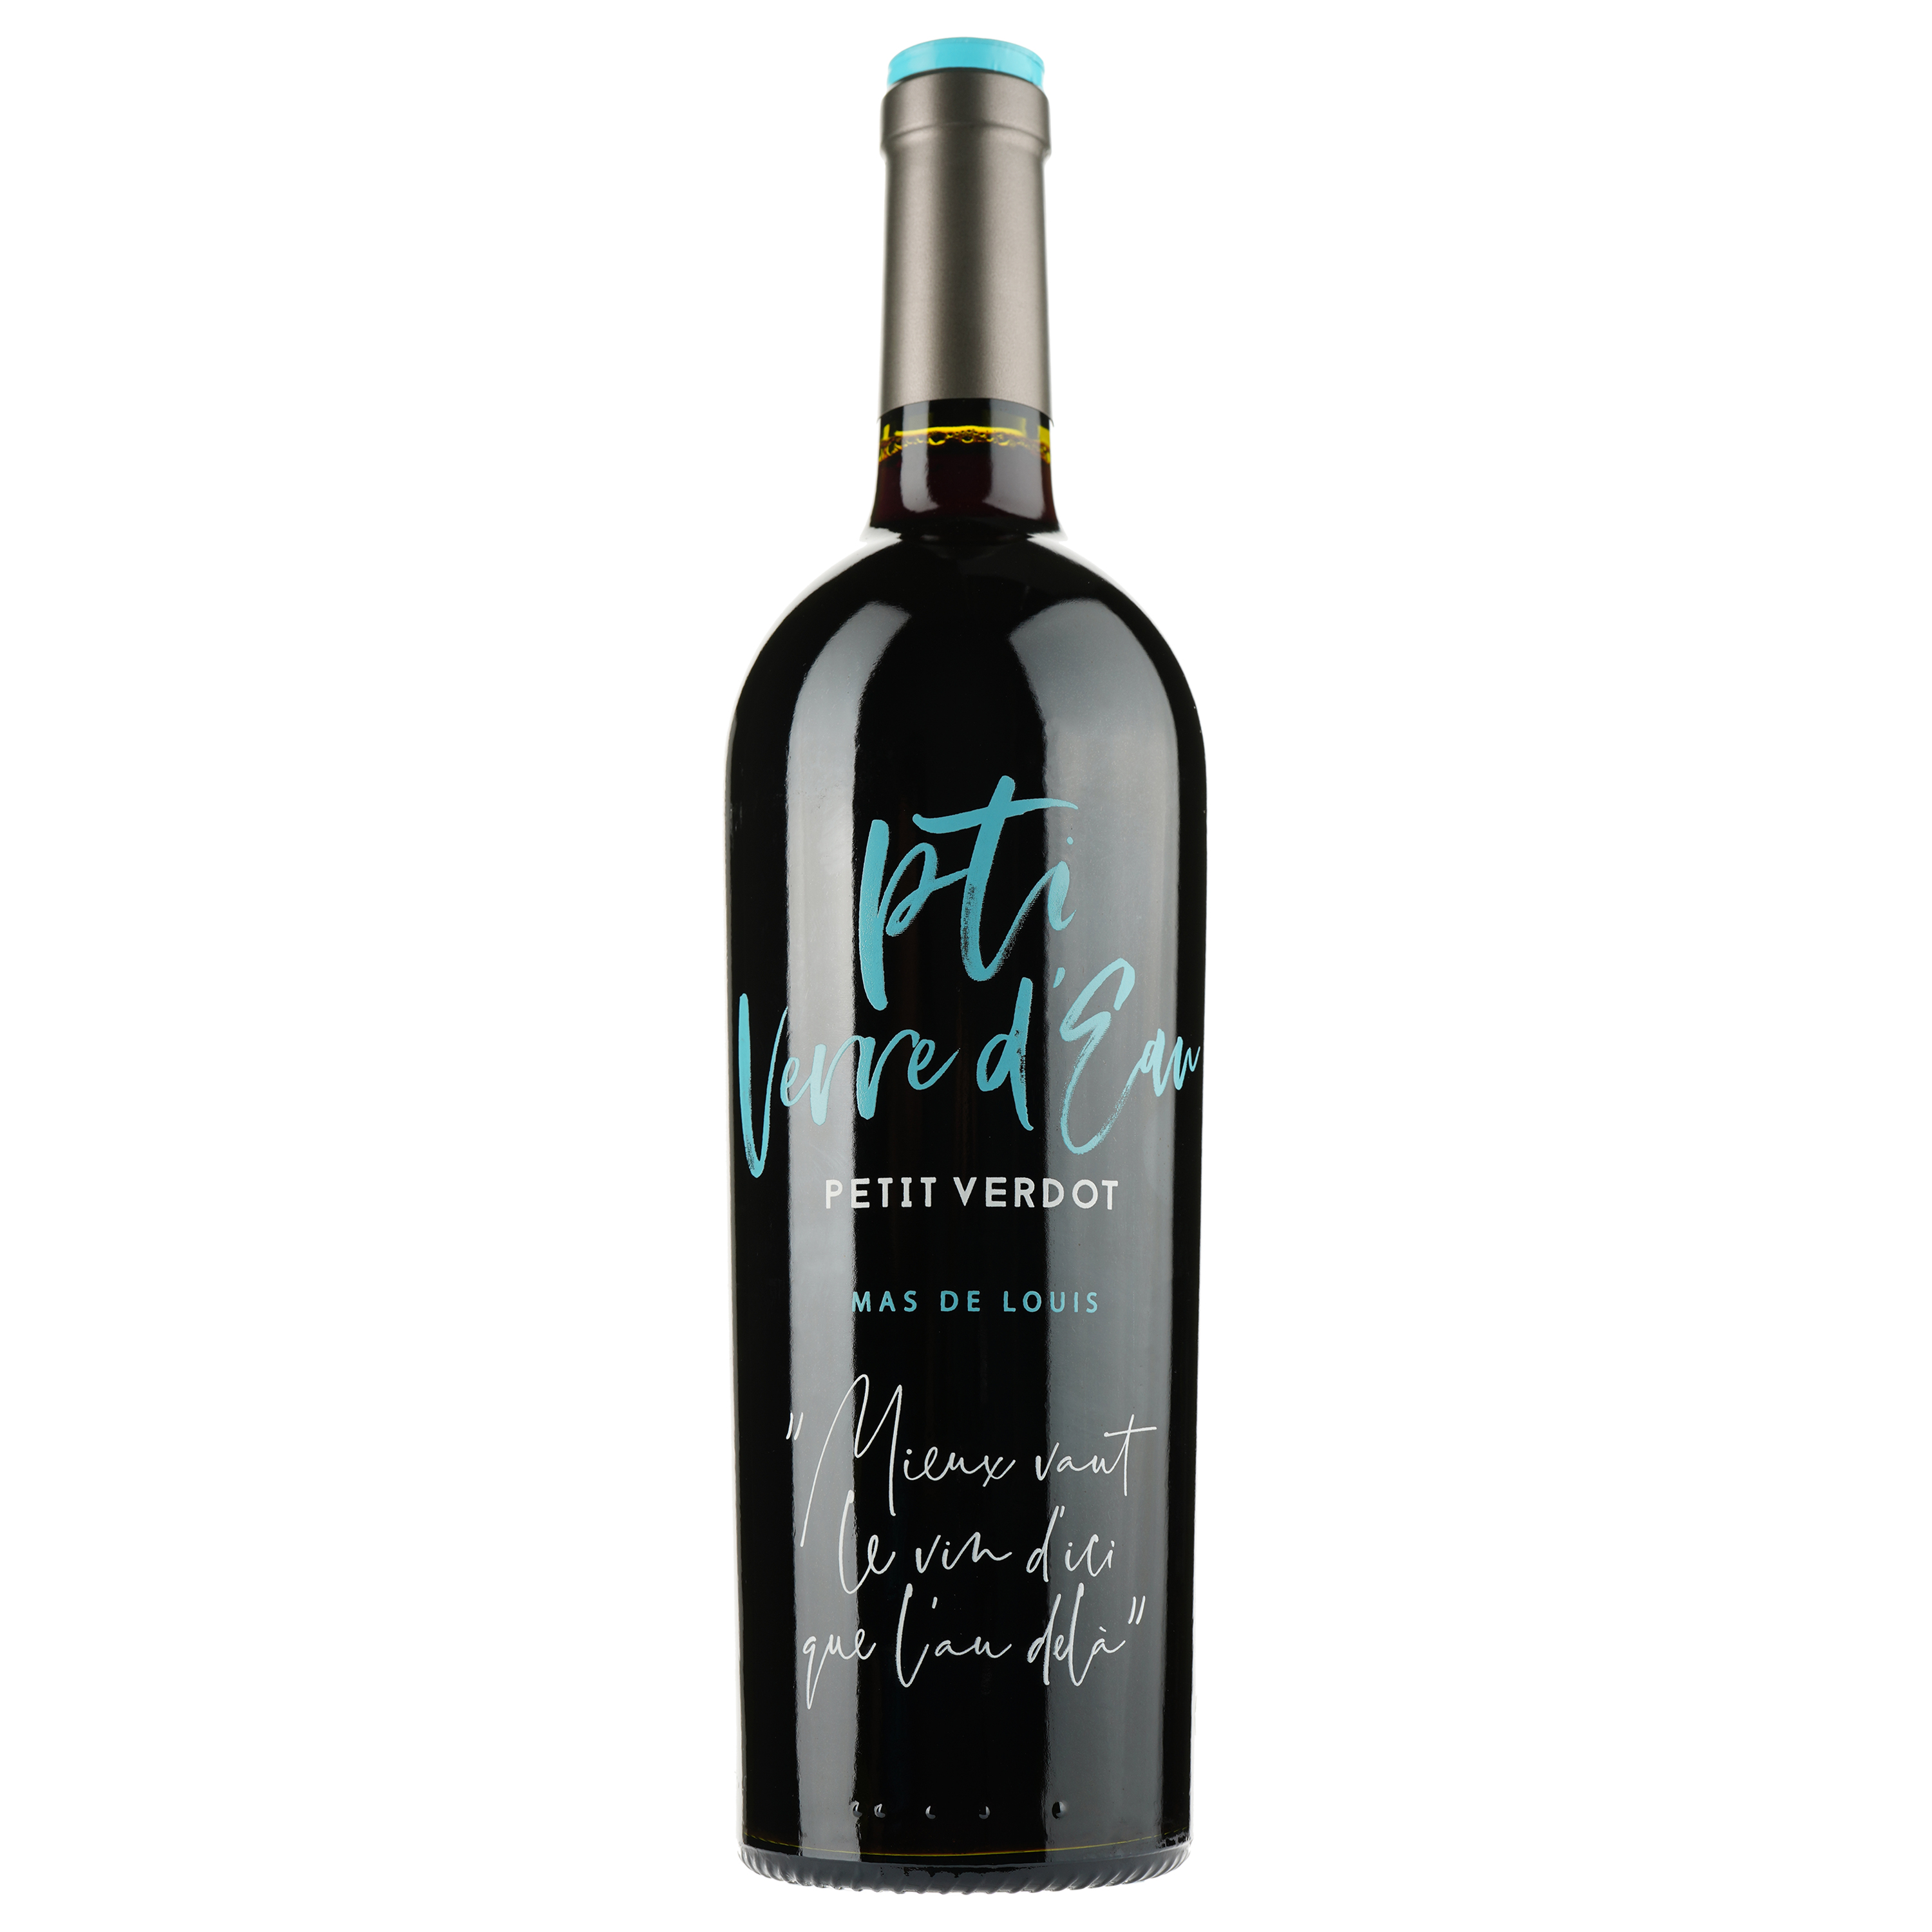 Вино Mas De Louis Pti Verre D'eau Bio 2018 Vin de France, червоне, сухе, 0,75 л - фото 1